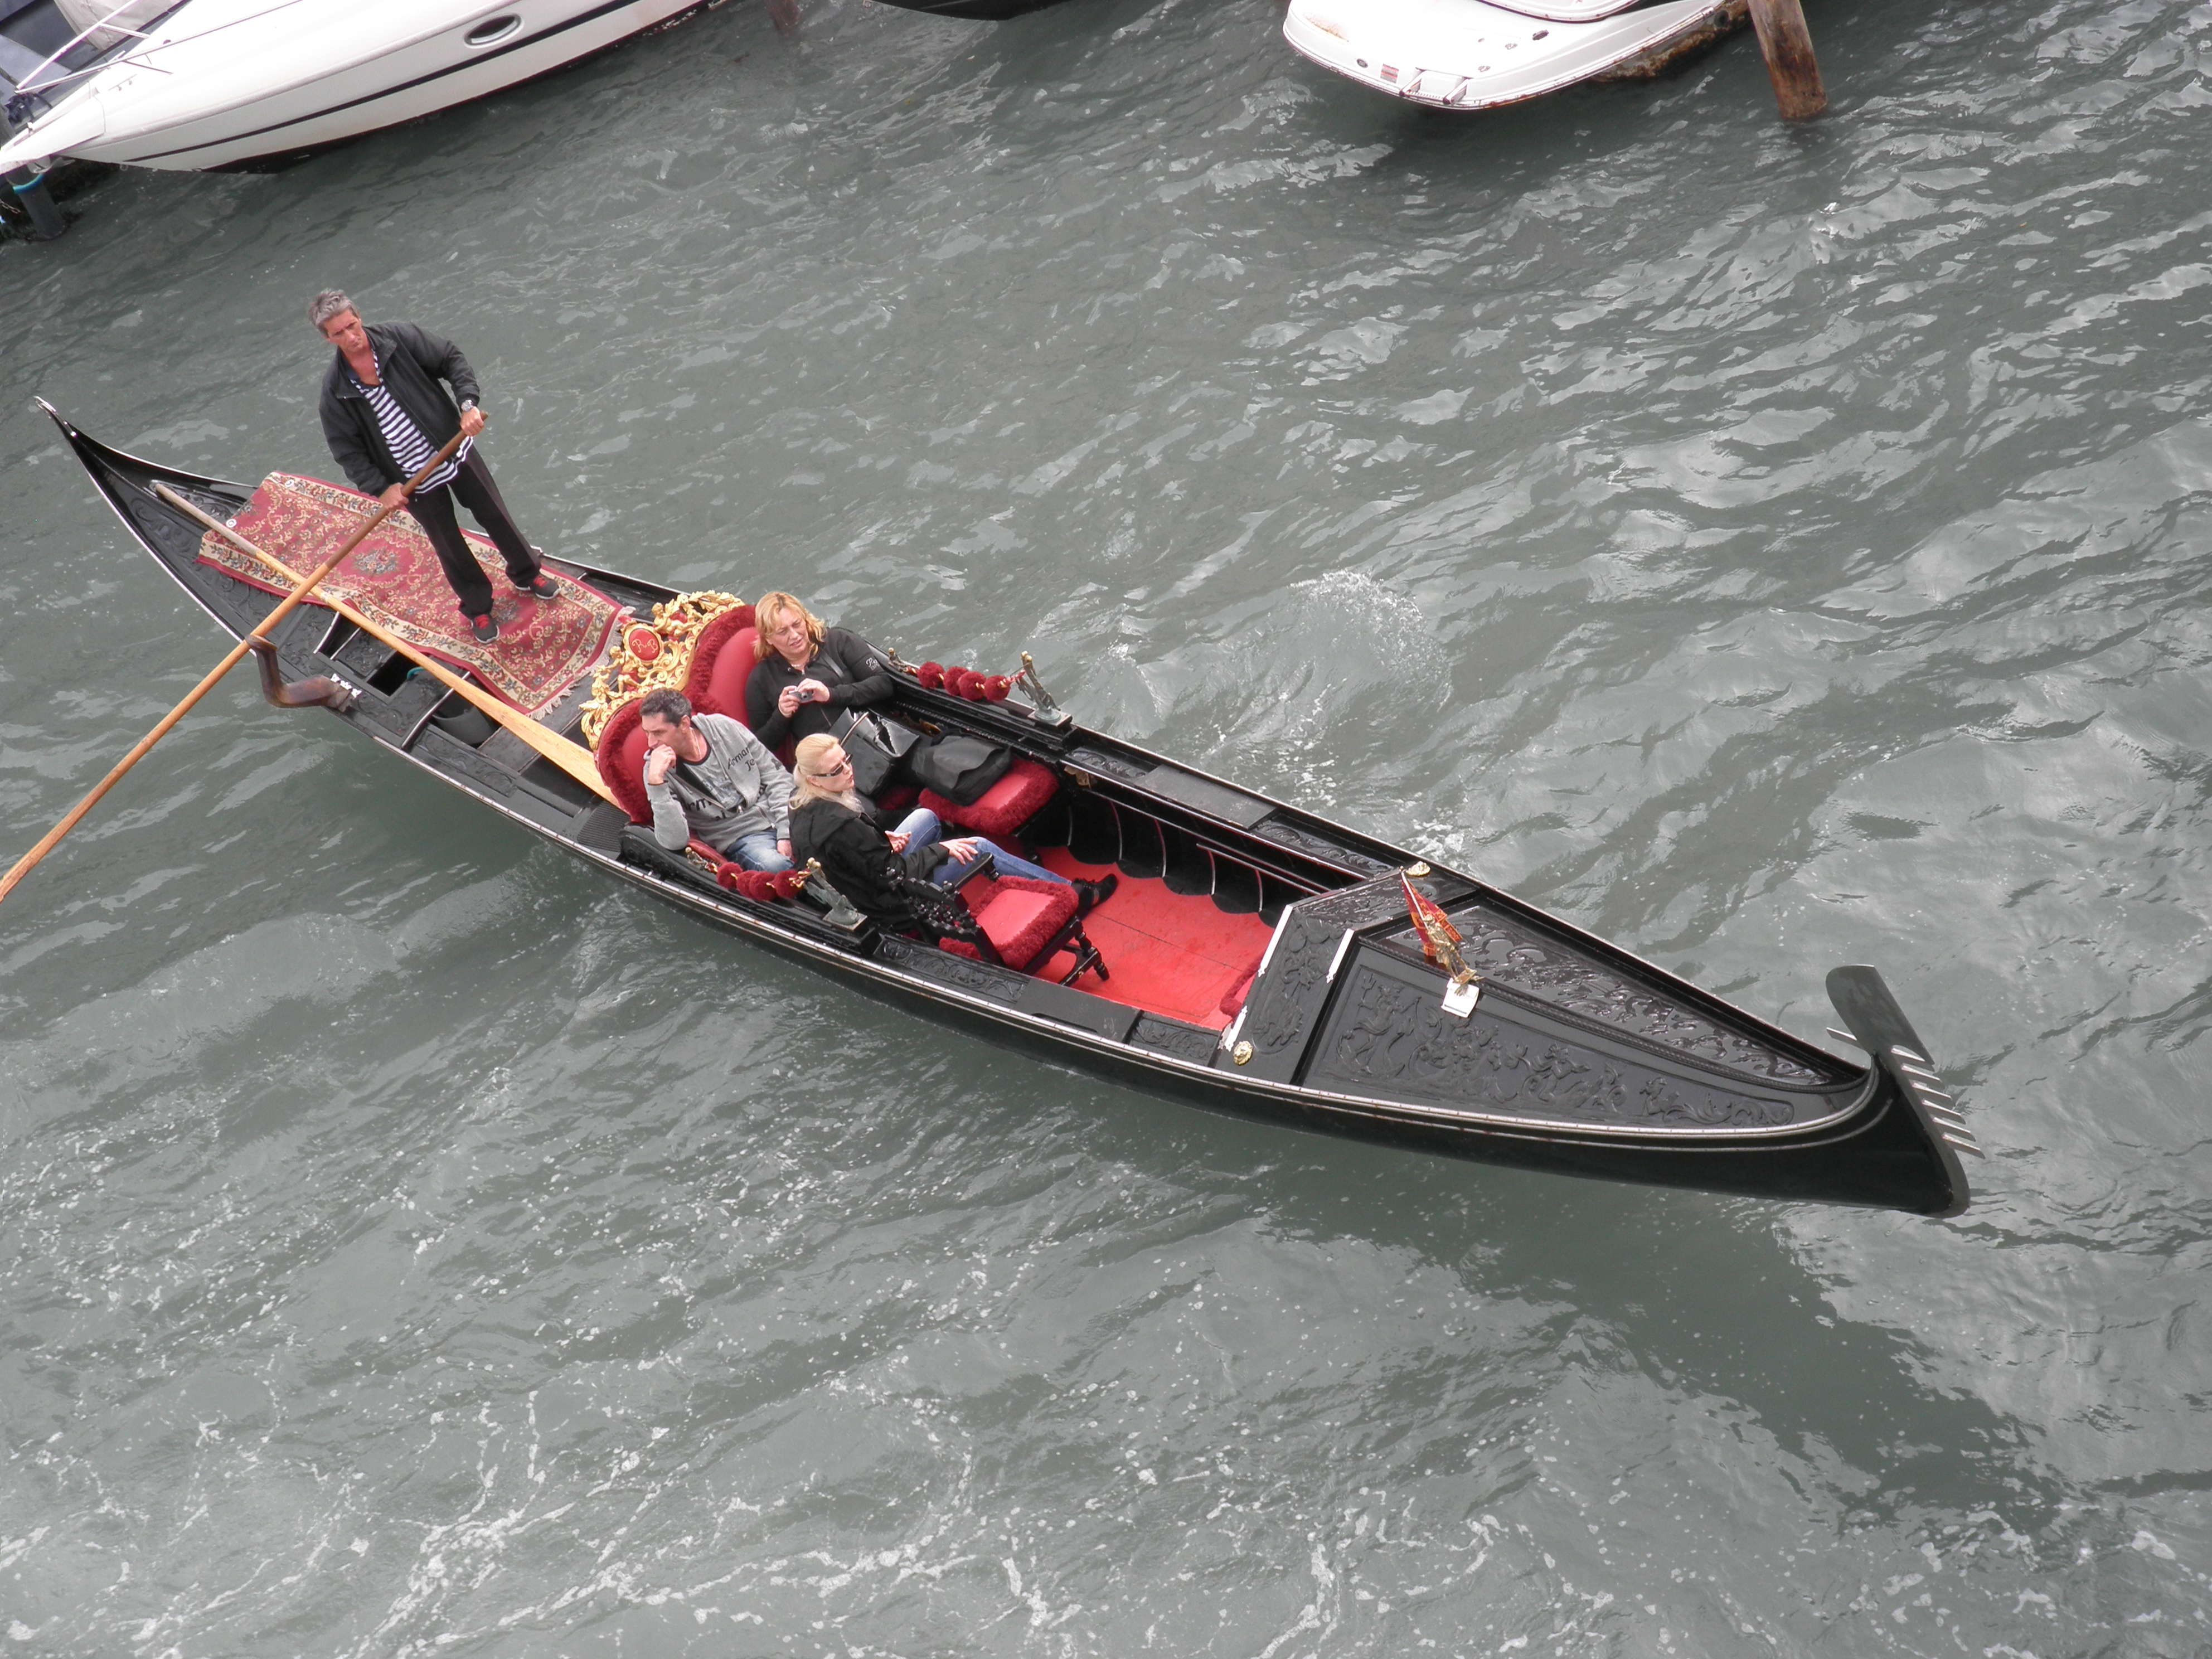 Venice gondola at the Canale Grande, Activity, Ride, Venice, Vacation, HQ Photo